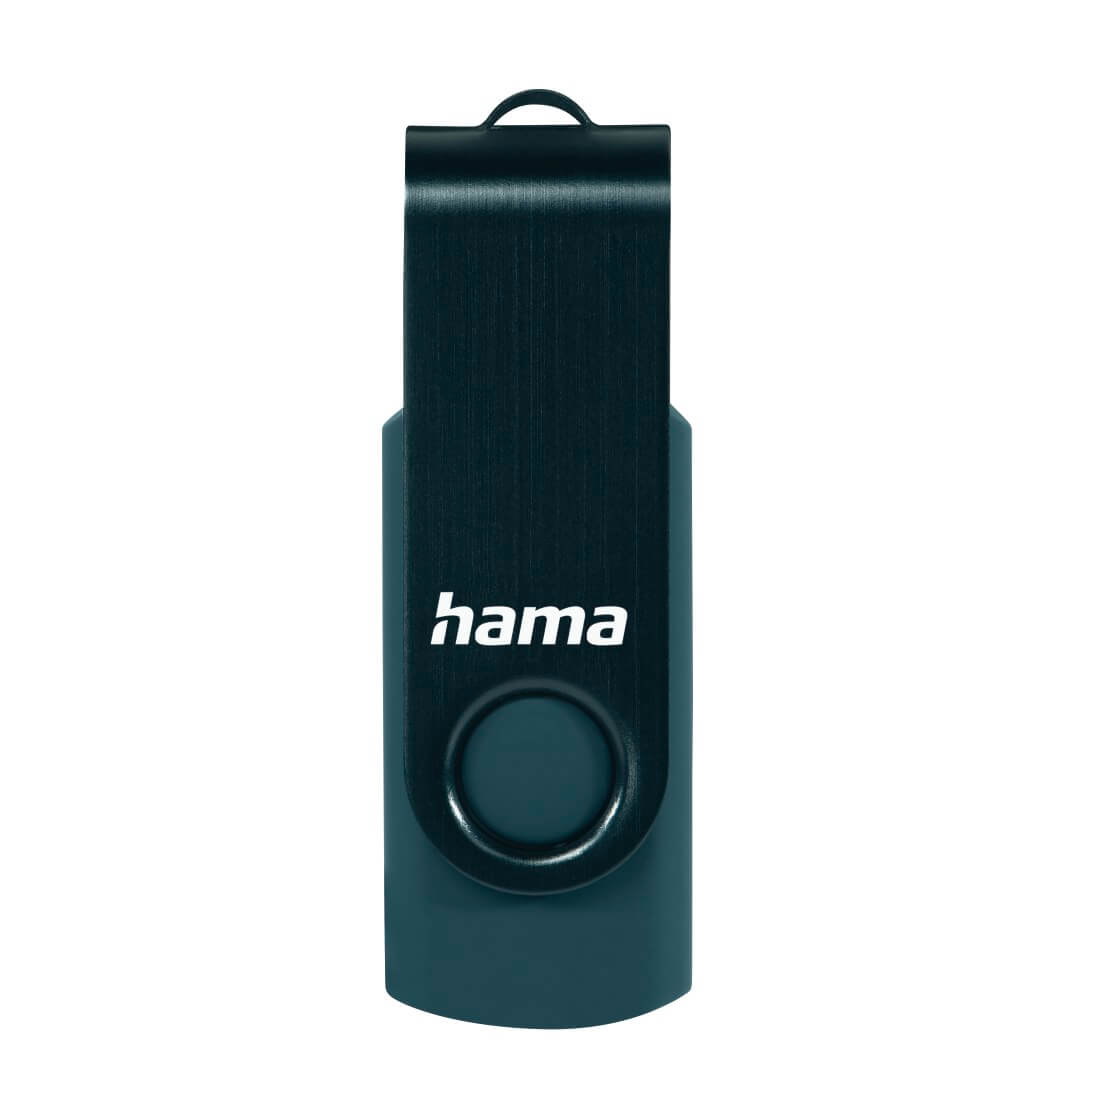 Hama Stick USB Rotate, USB 3.0, 256 GB, 90 MB/s